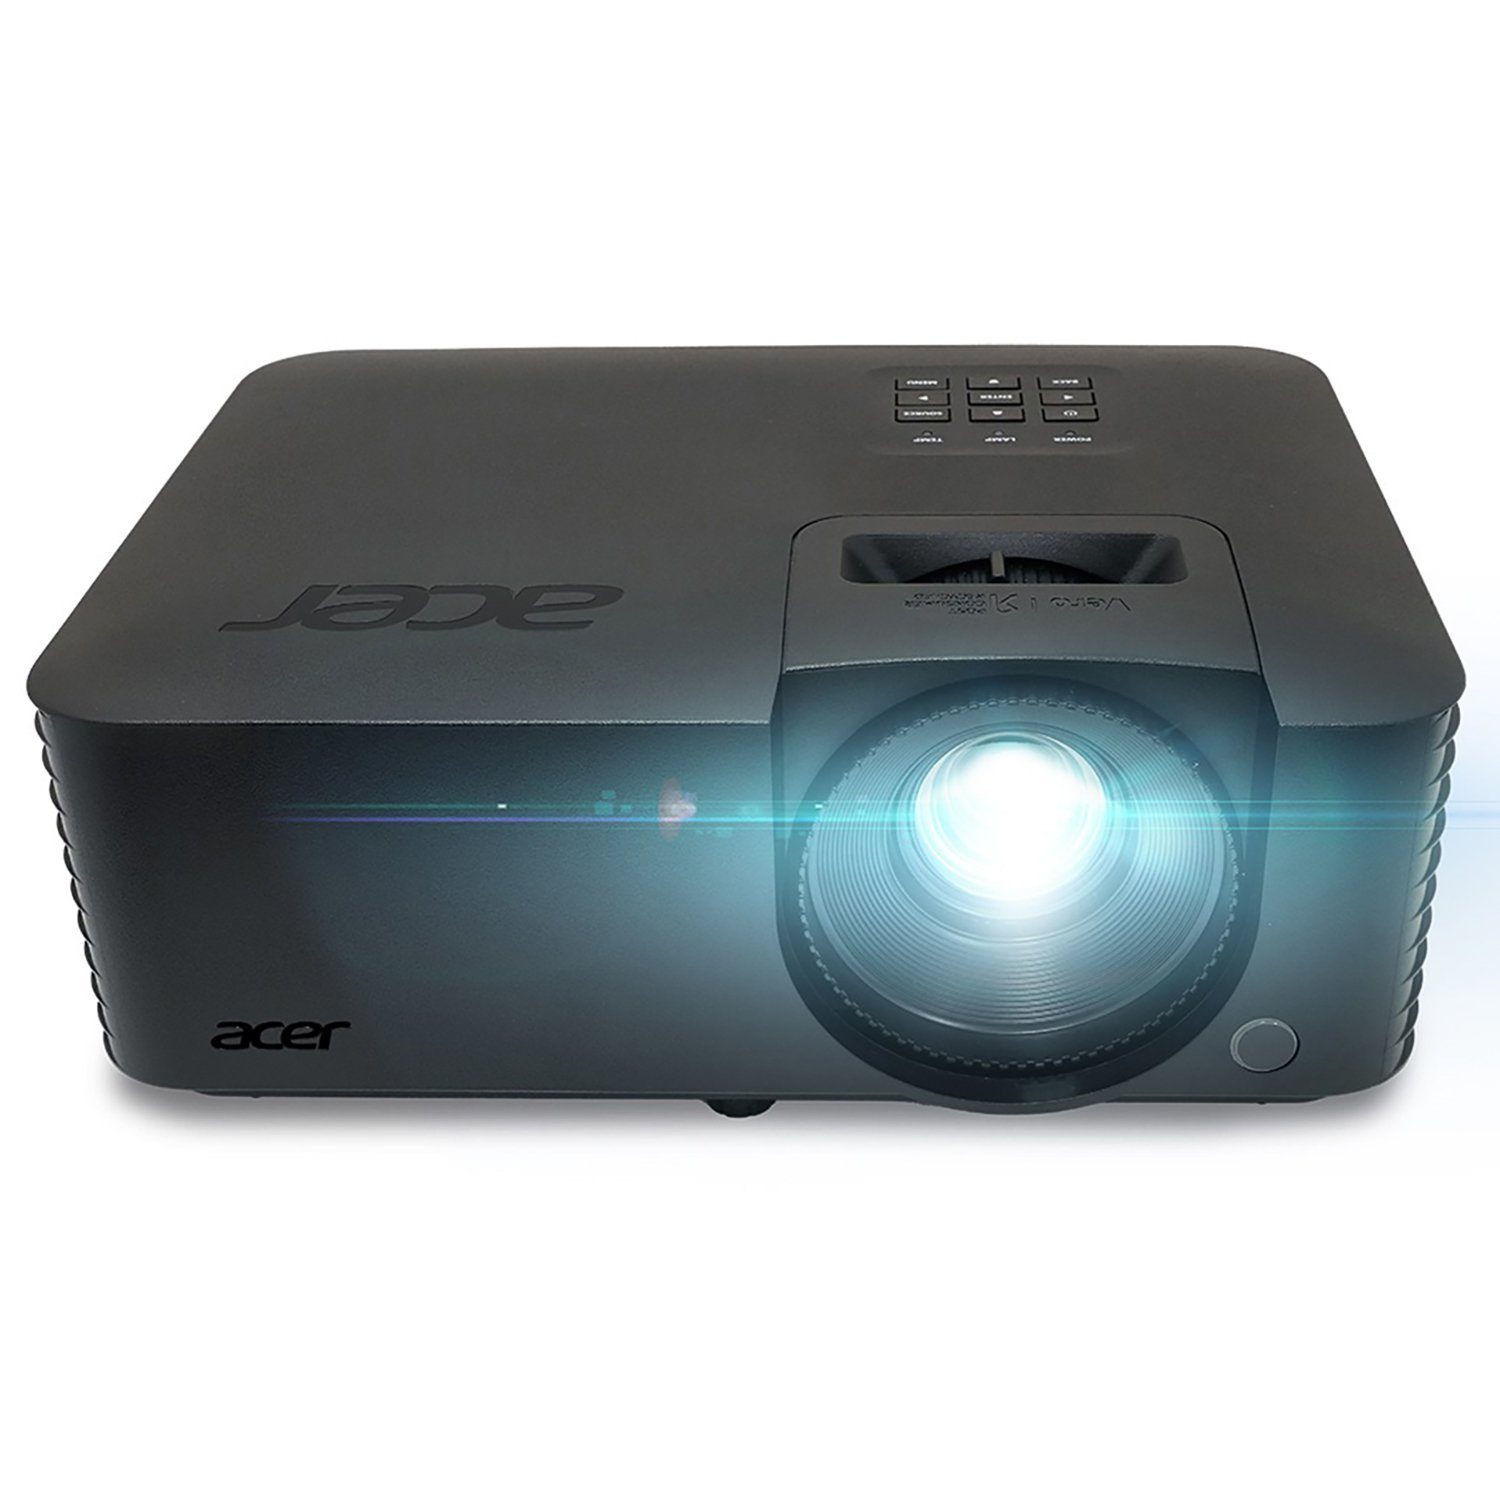 Acer XL2220 Beamer (3500 lm, 1024 px) 2000000:1, 768 x